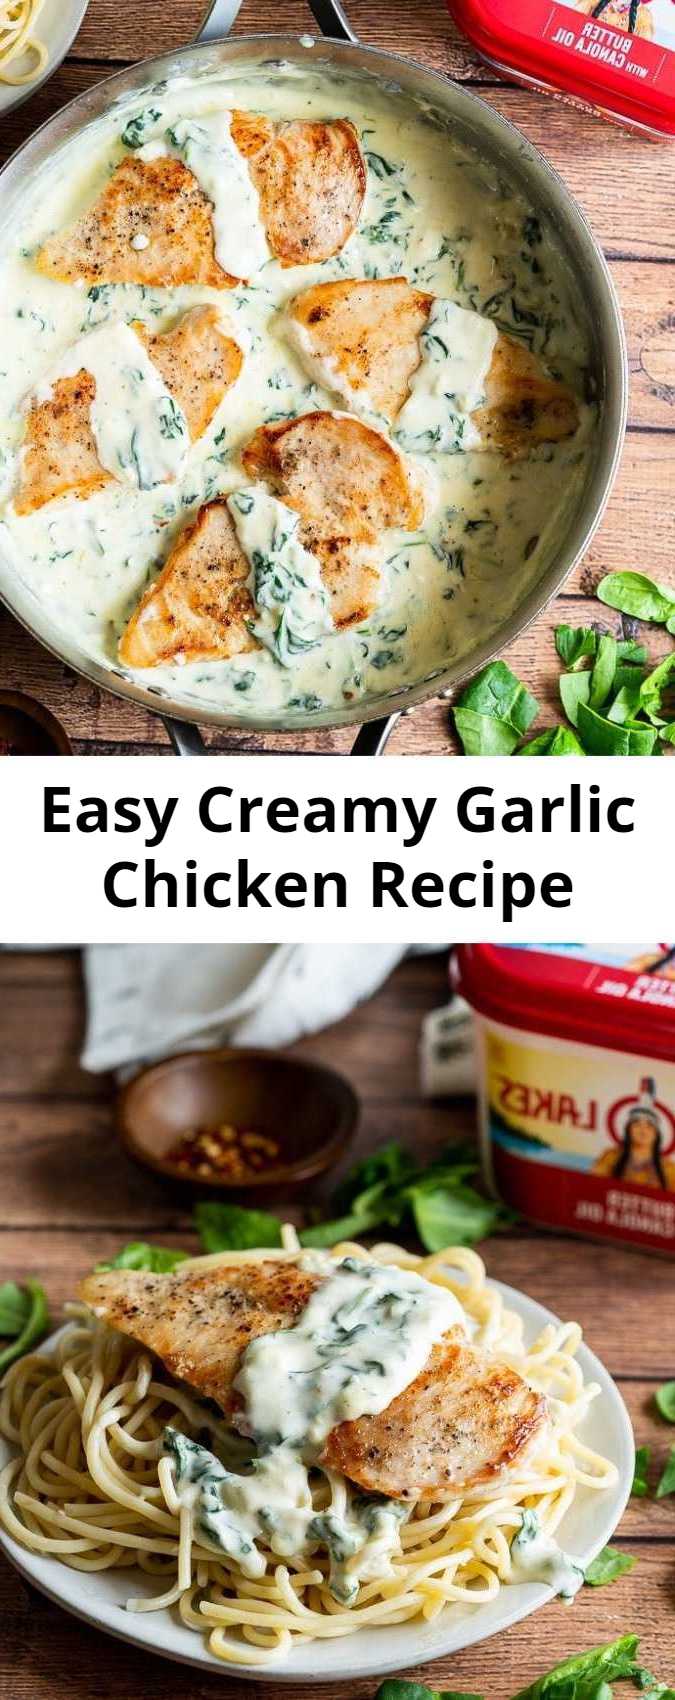 Easy Creamy Garlic Chicken Recipe - This Creamy Garlic Chicken Recipe with spinach in a creamy parmesan cheese sauce is delicious over hot pasta.